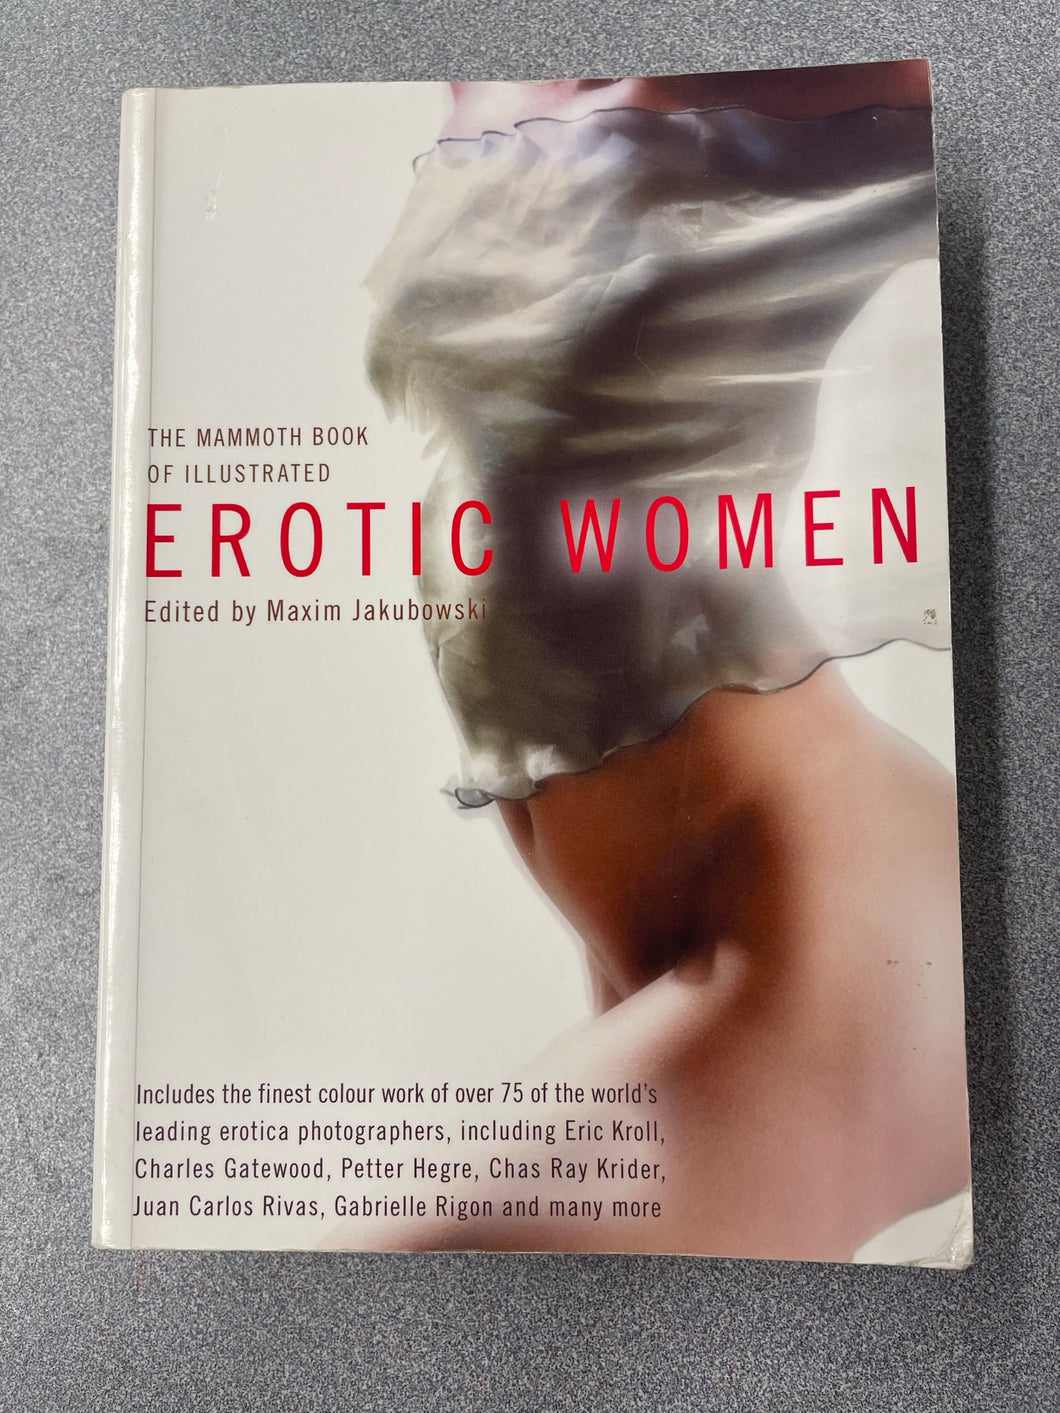 The Mammoth Book of Illustrated Erotic Women, Jakubowski, Maxim, ed. [2007] ER 7/23